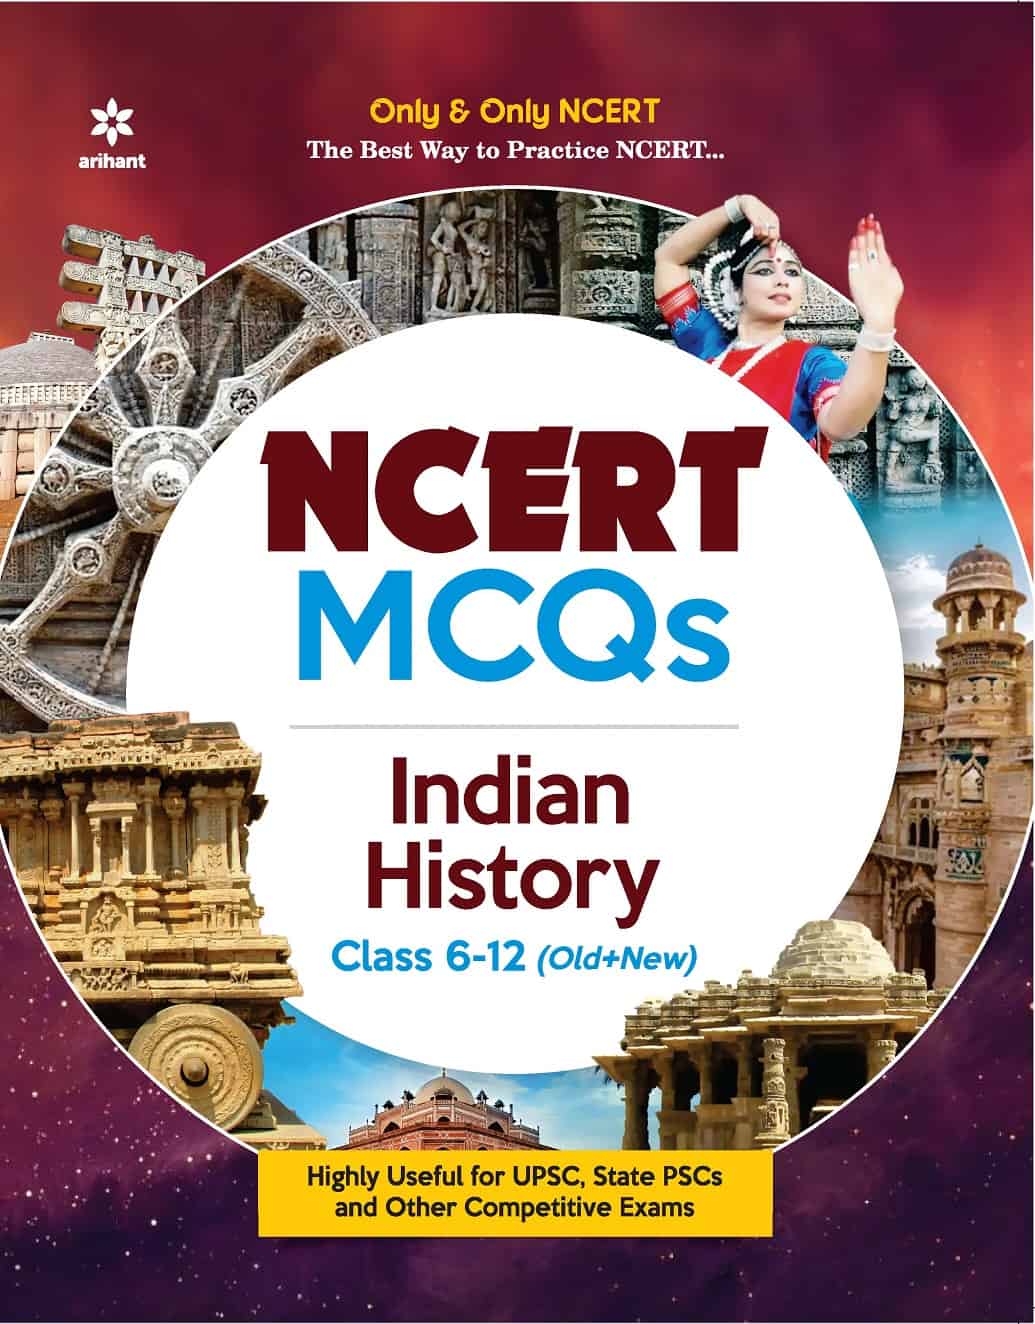 Arihant NCERT MCQs Indian History - Class 9-12 PDF